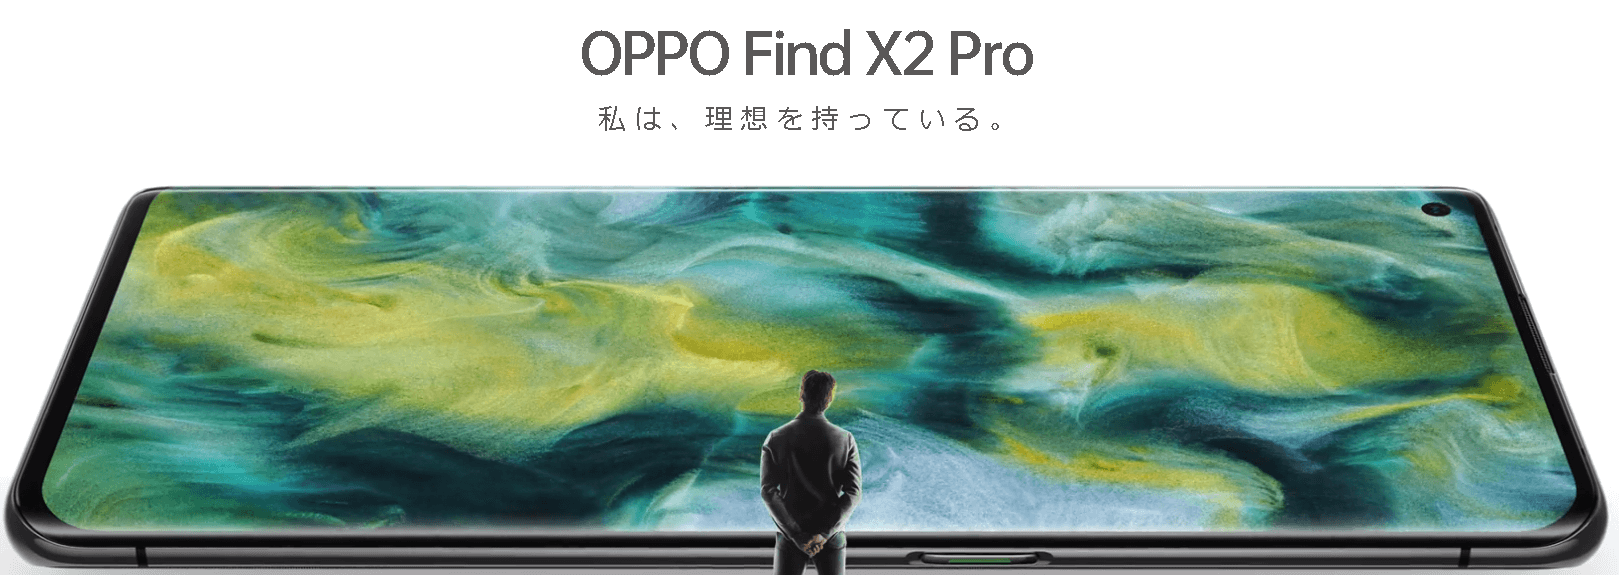 OPPO Reno Find X2 Pro